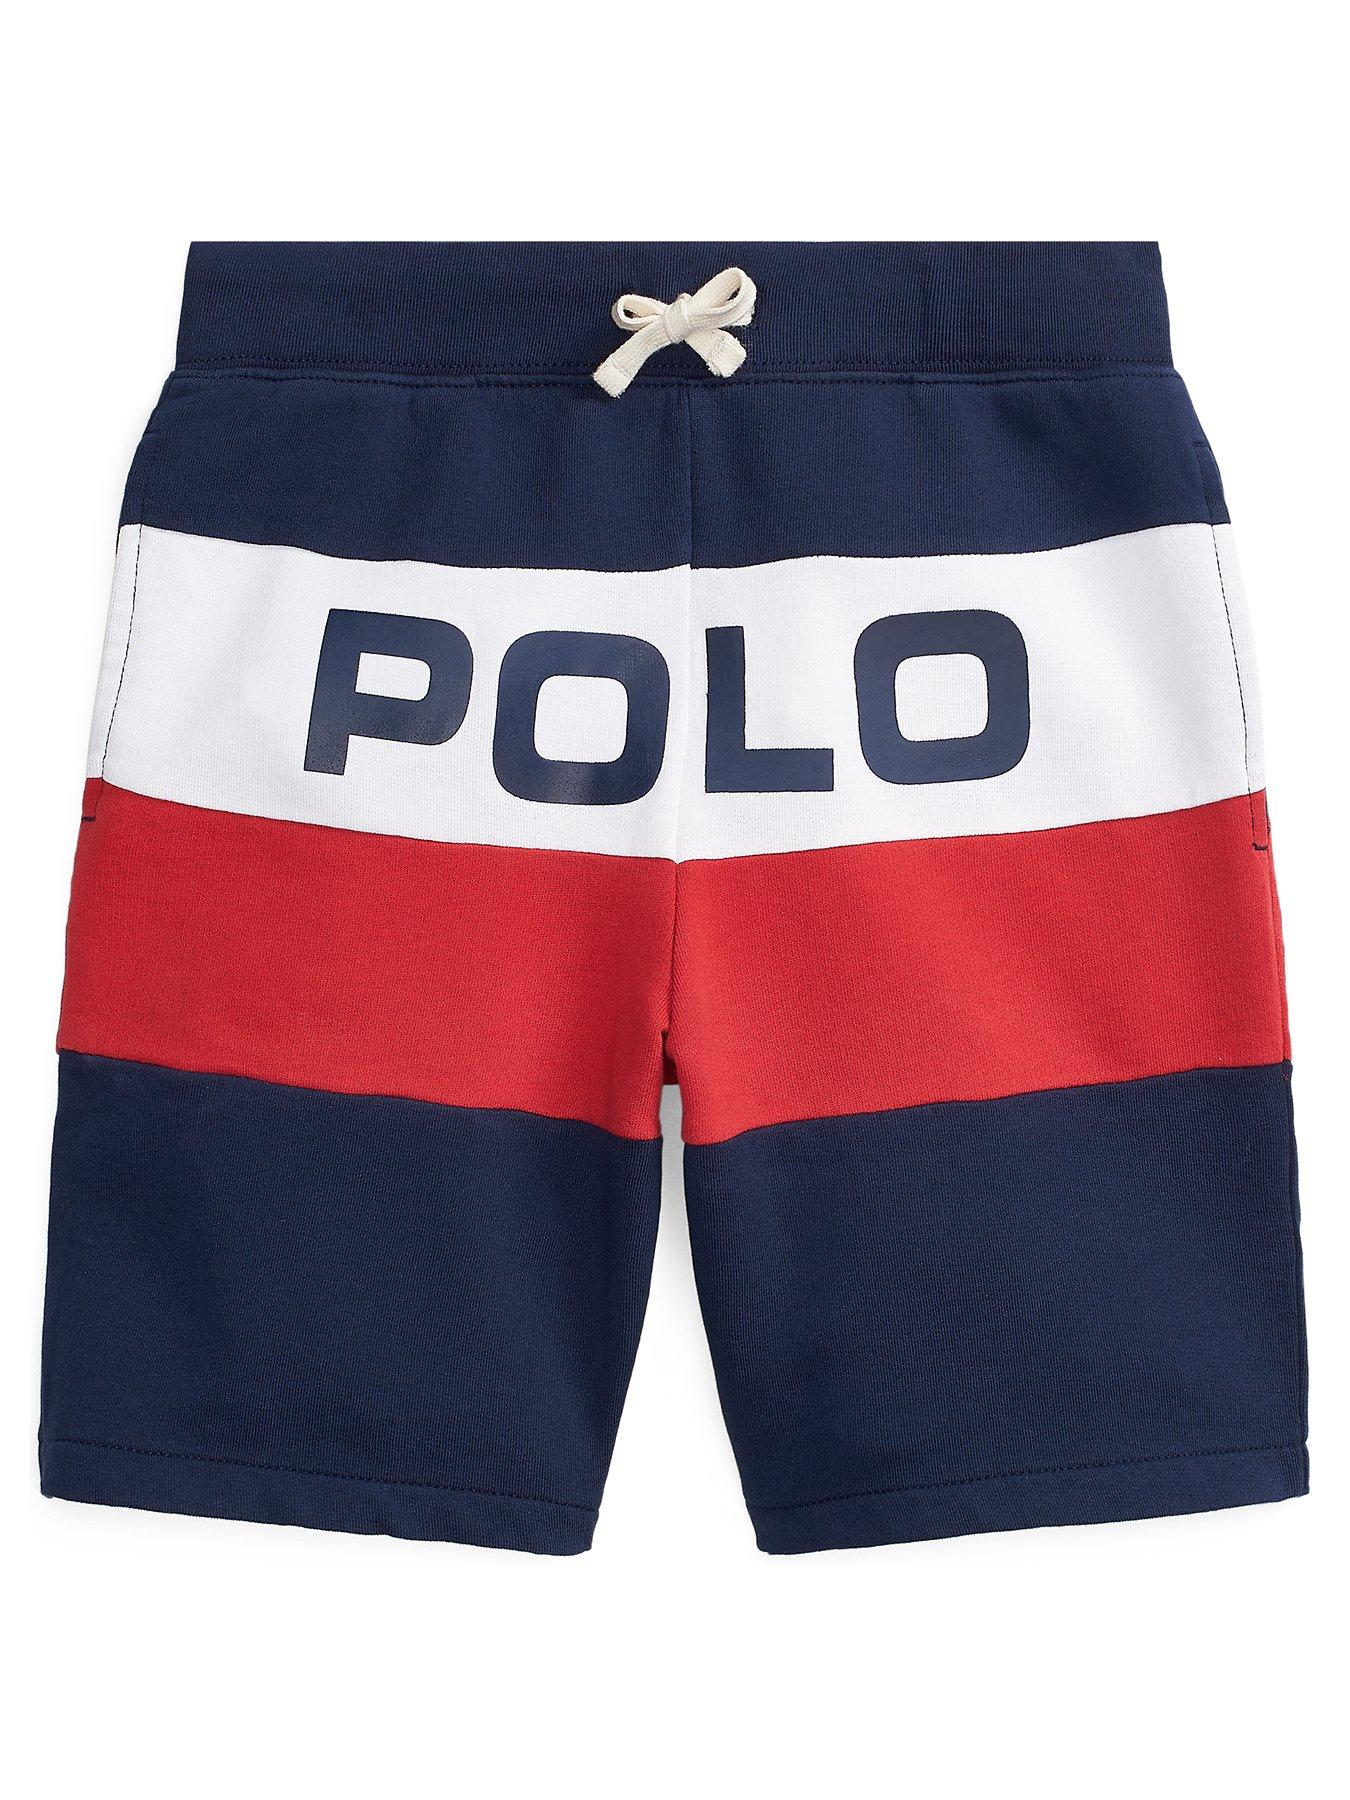 boys navy jersey shorts